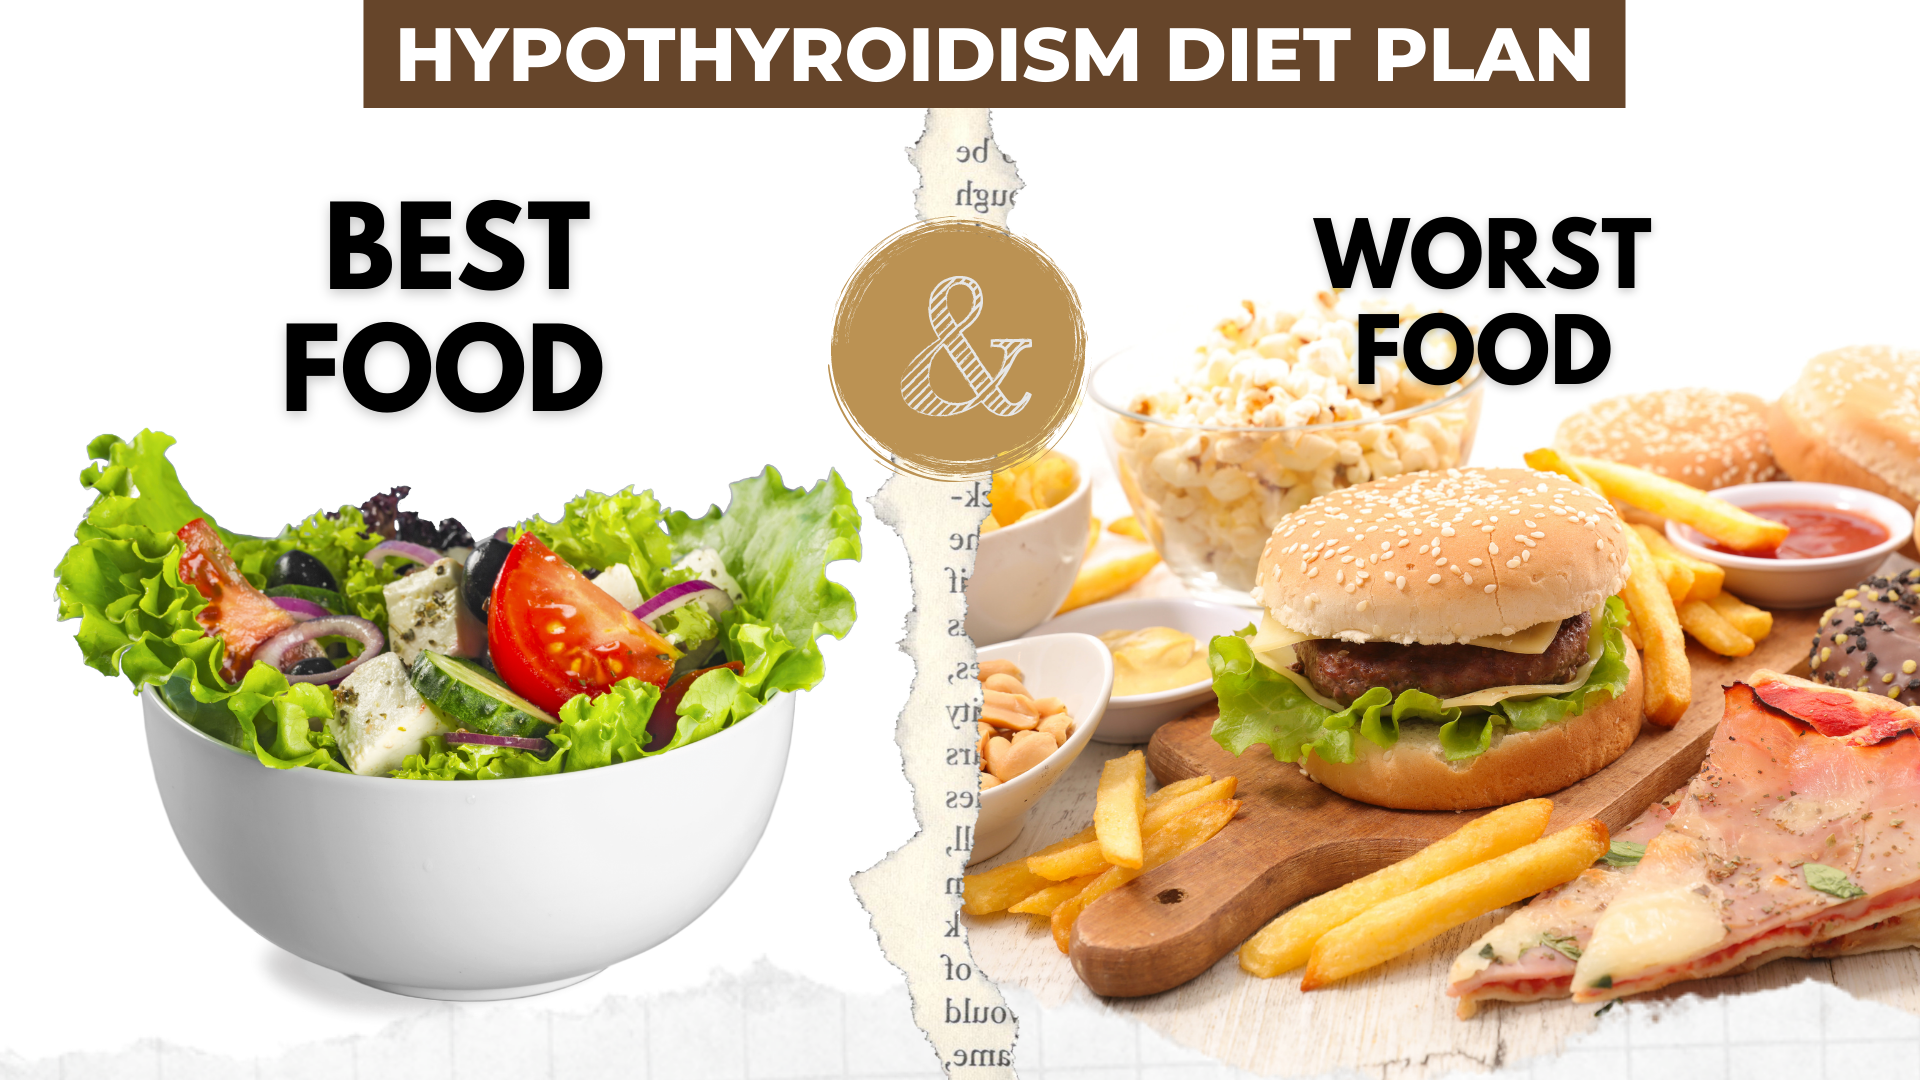 Hypothyroidism diet plan